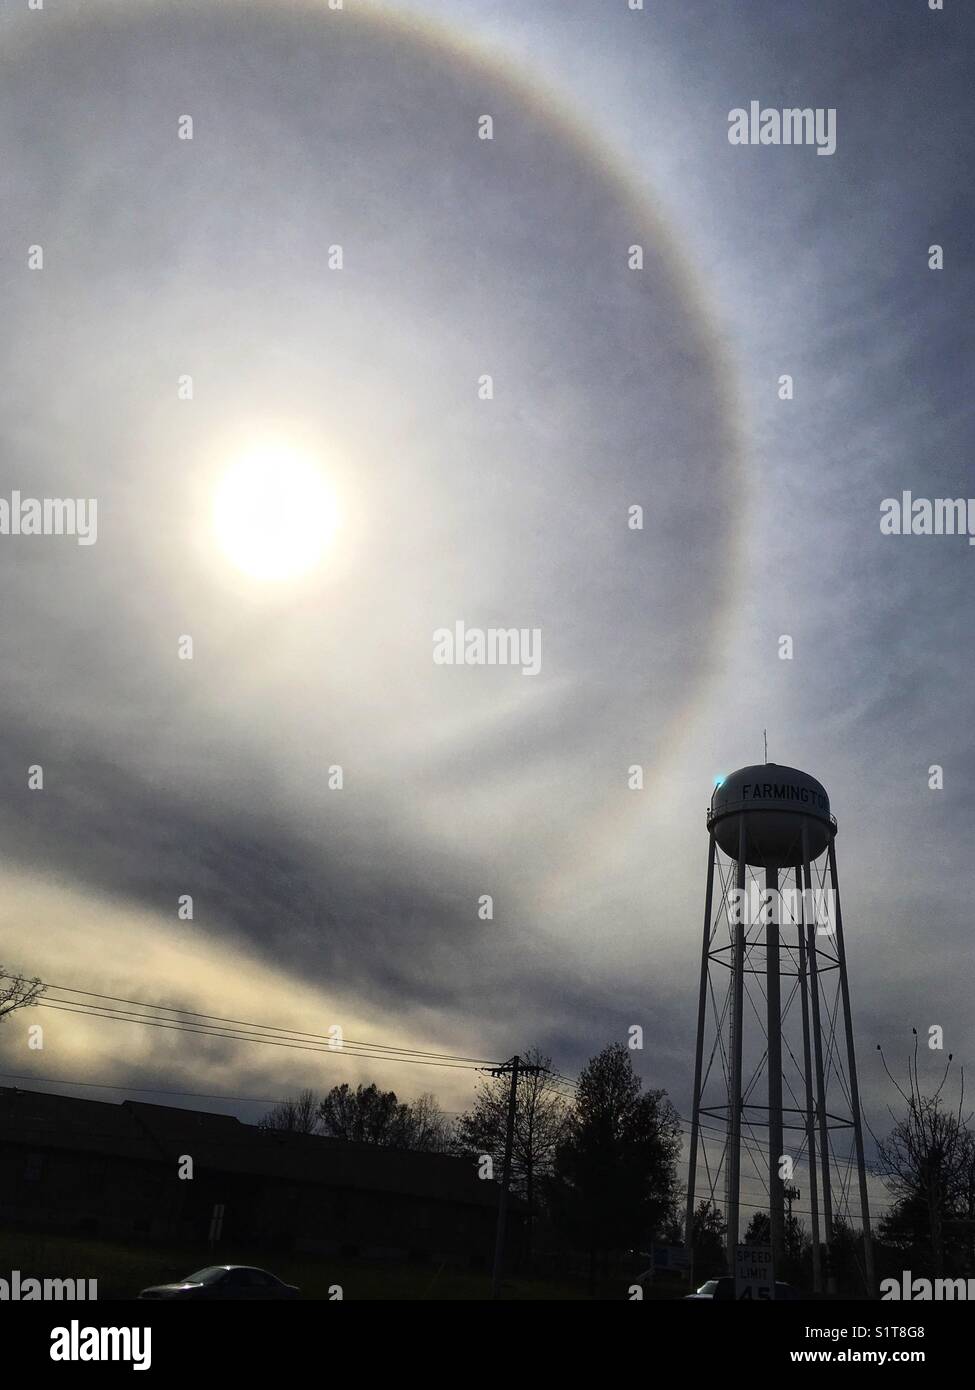 Water tower and sun with circular halo in Farmington, MO, United States. November 21, 2017. Stock Photo